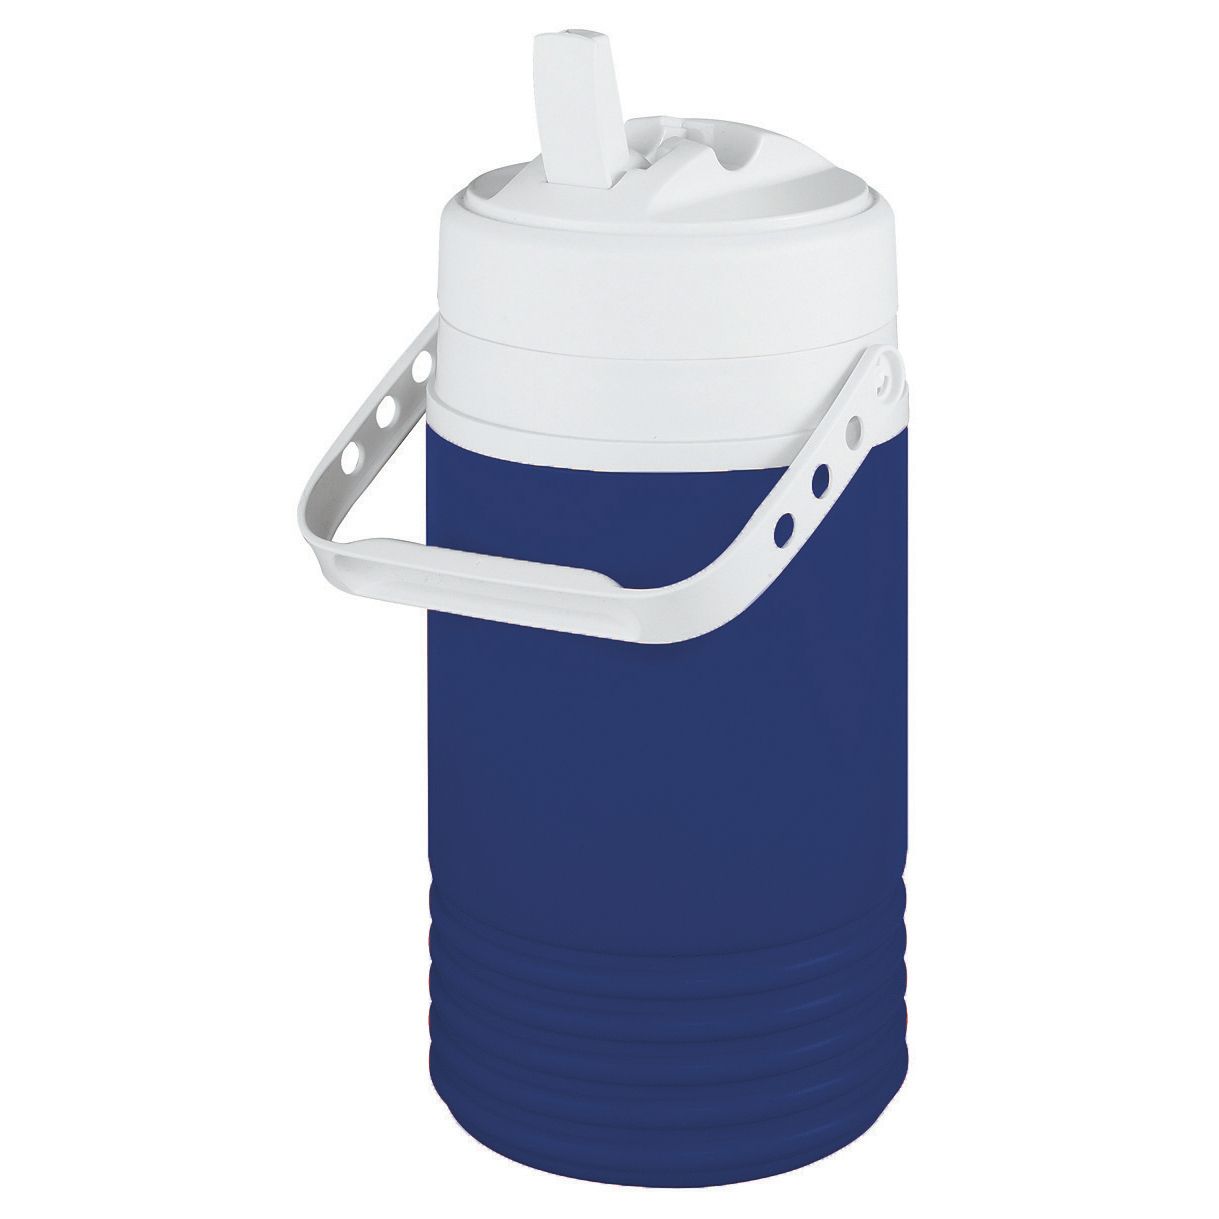 igloo 5 gallon water jug